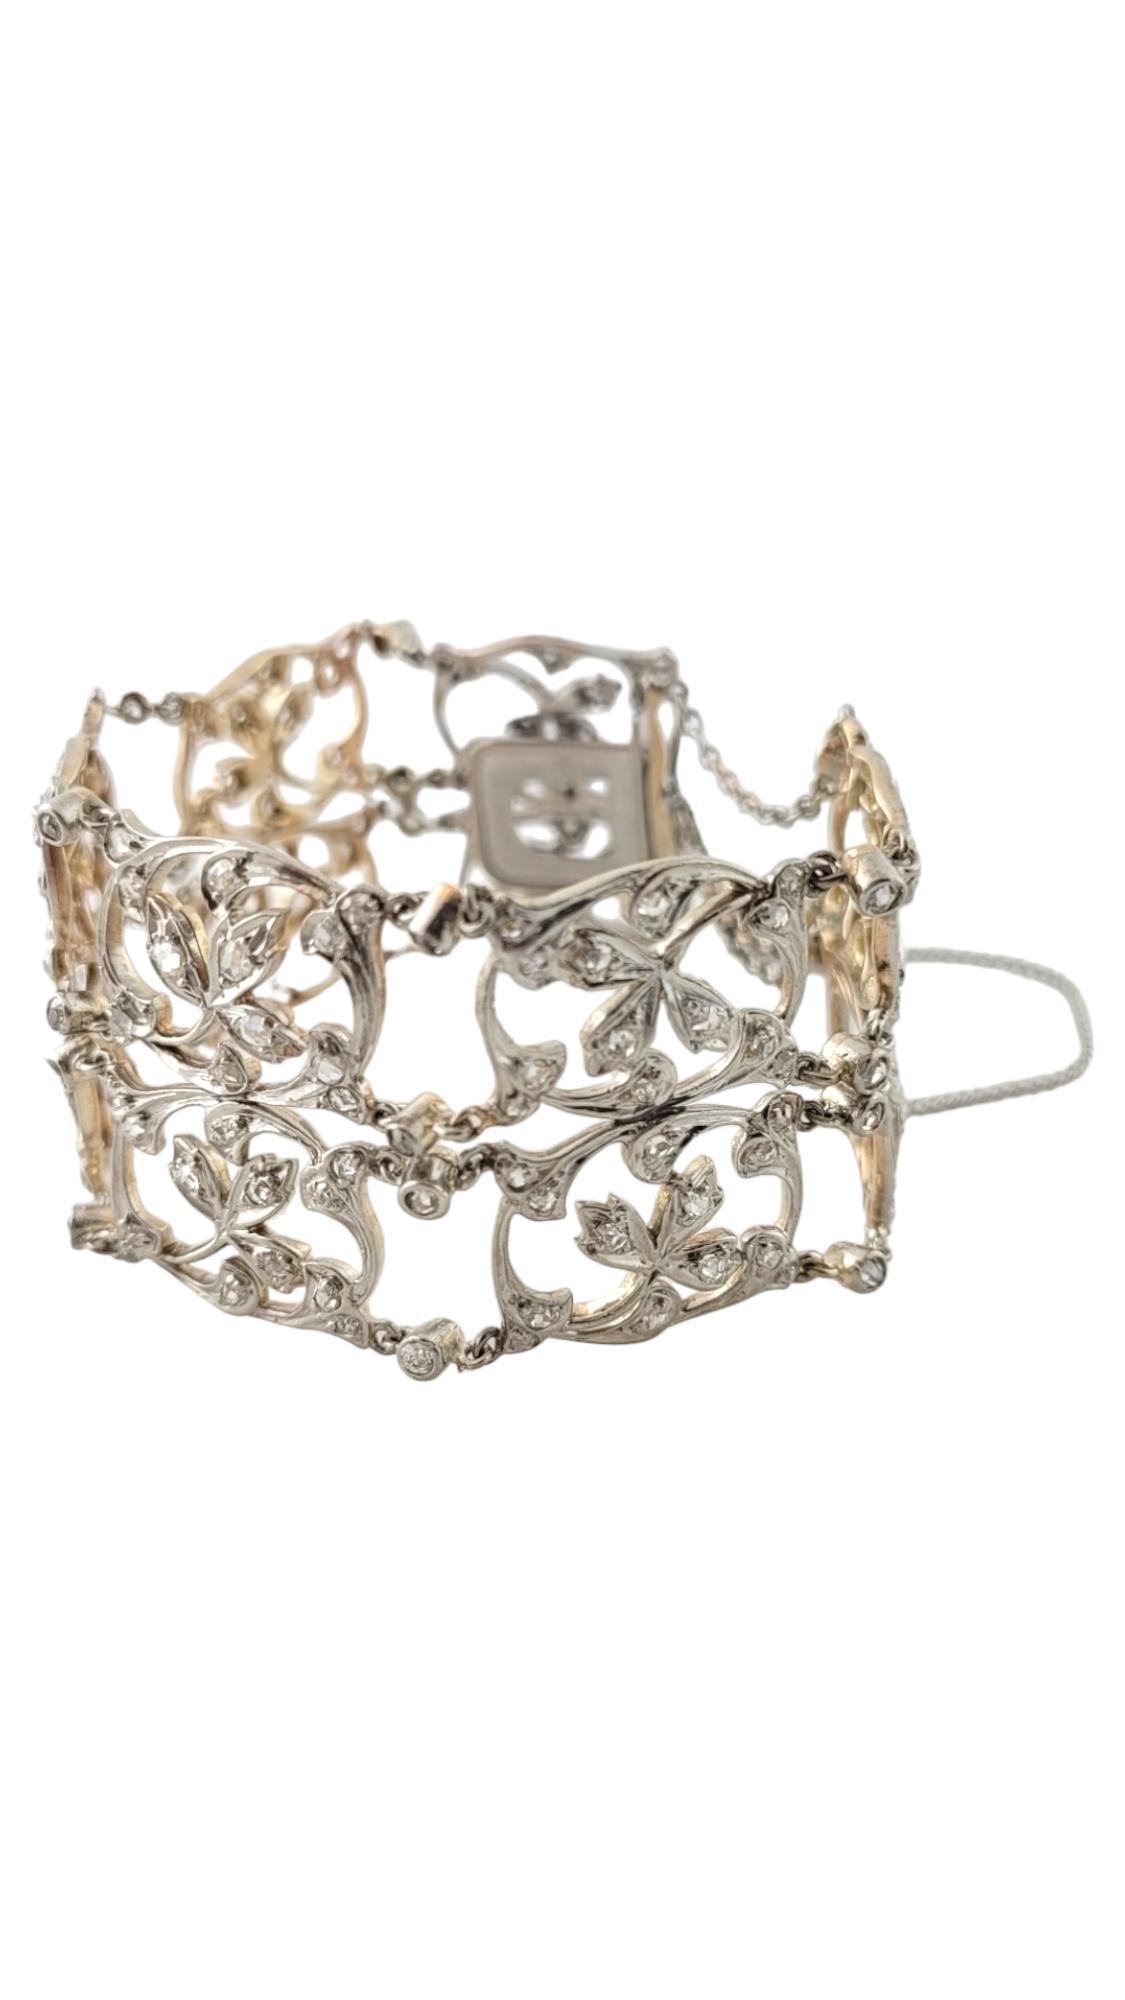 Delicate Victorian Antique Design Platinum 18K Rose Gold Diamond Bracelet

Gorgeous platinum 18K rose gold diamond bracelet with a floral motif!

Milgrain bezel and bead set rose cut diamonds 

Rose cut diamonds are of SI1 - I1 clarity, and H-I